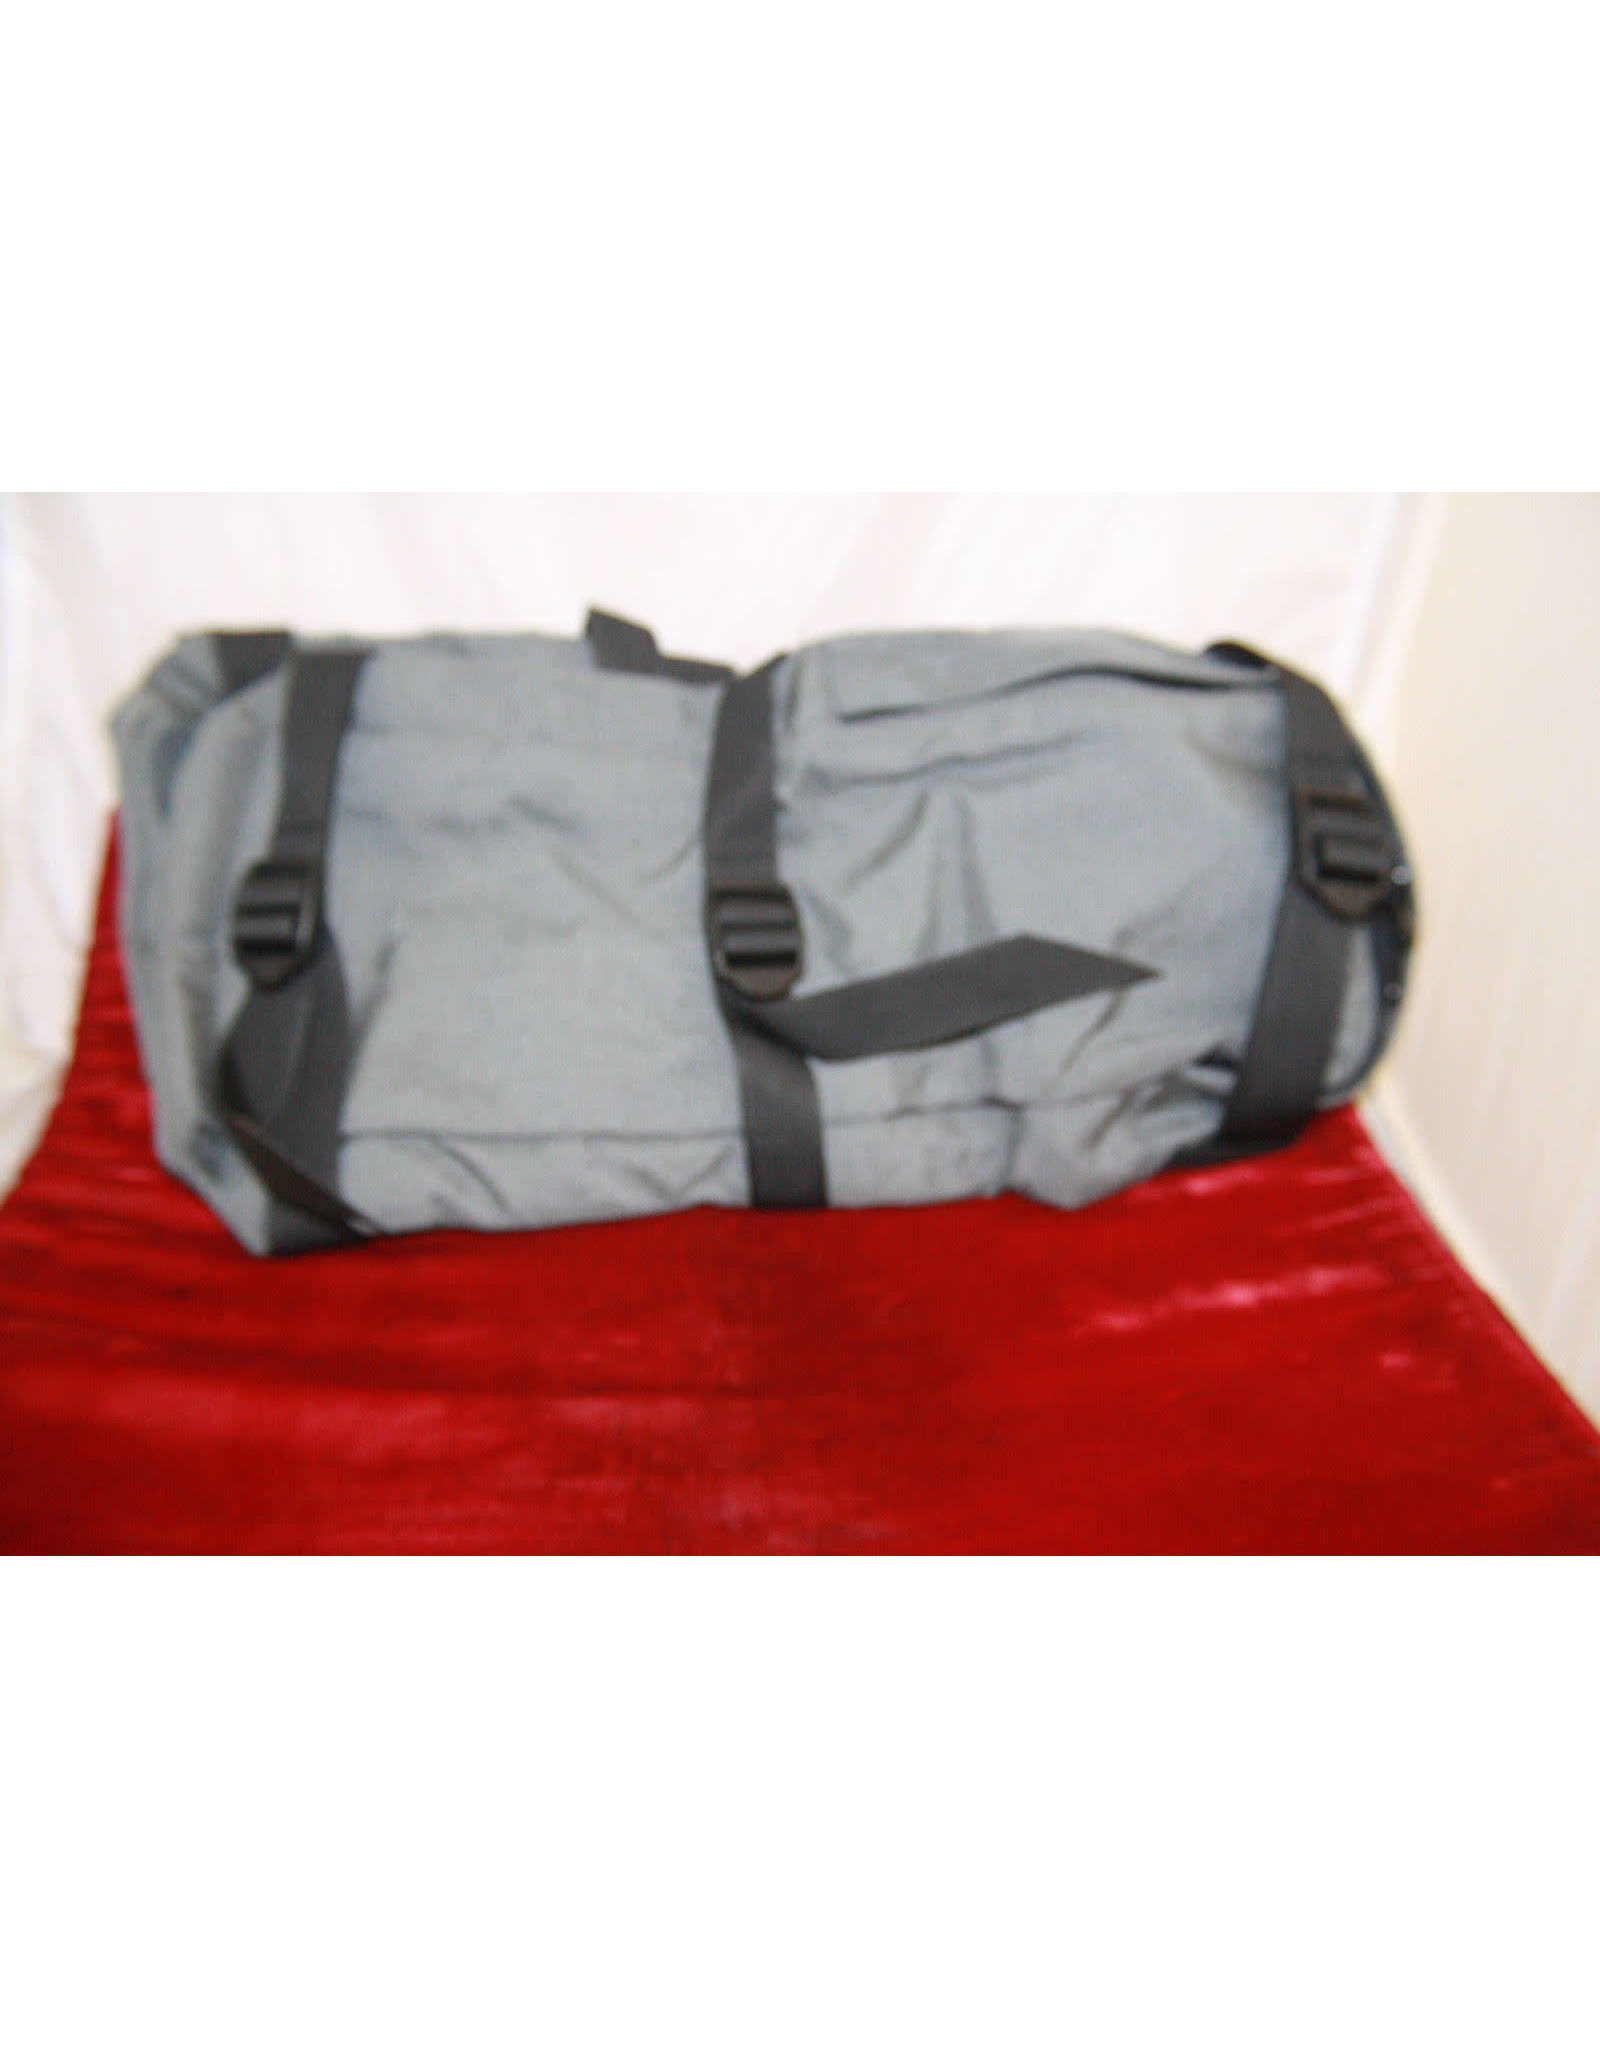 Tamrac Side pockets for use with Tamrac's model 787 super backpack